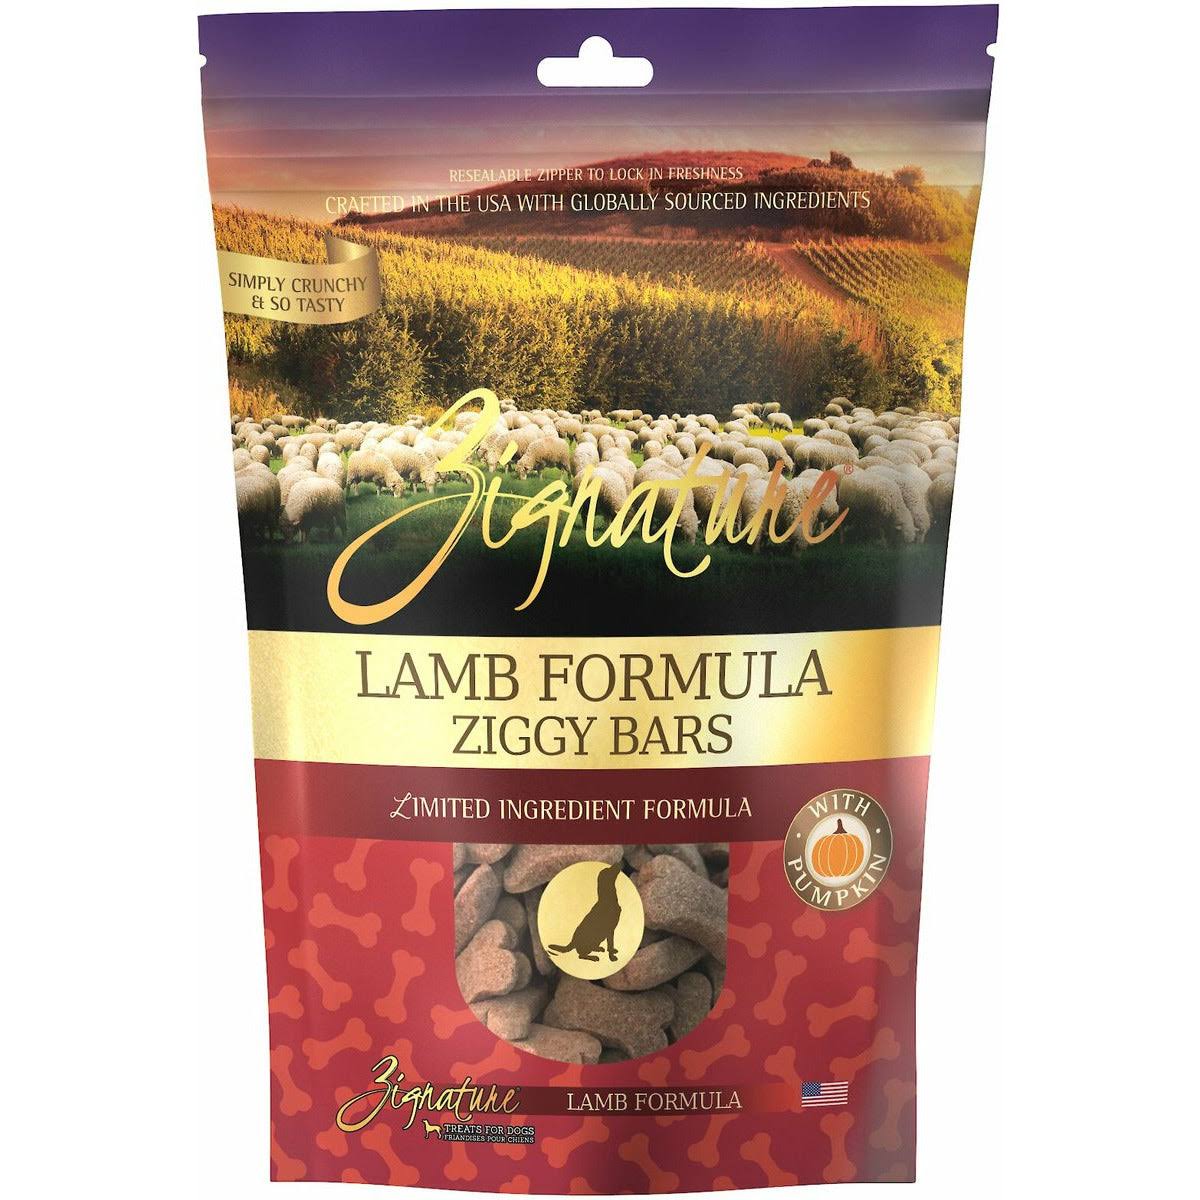 Zignature Limited Ingredient Lamb Formula Ziggy Bars 12 oz